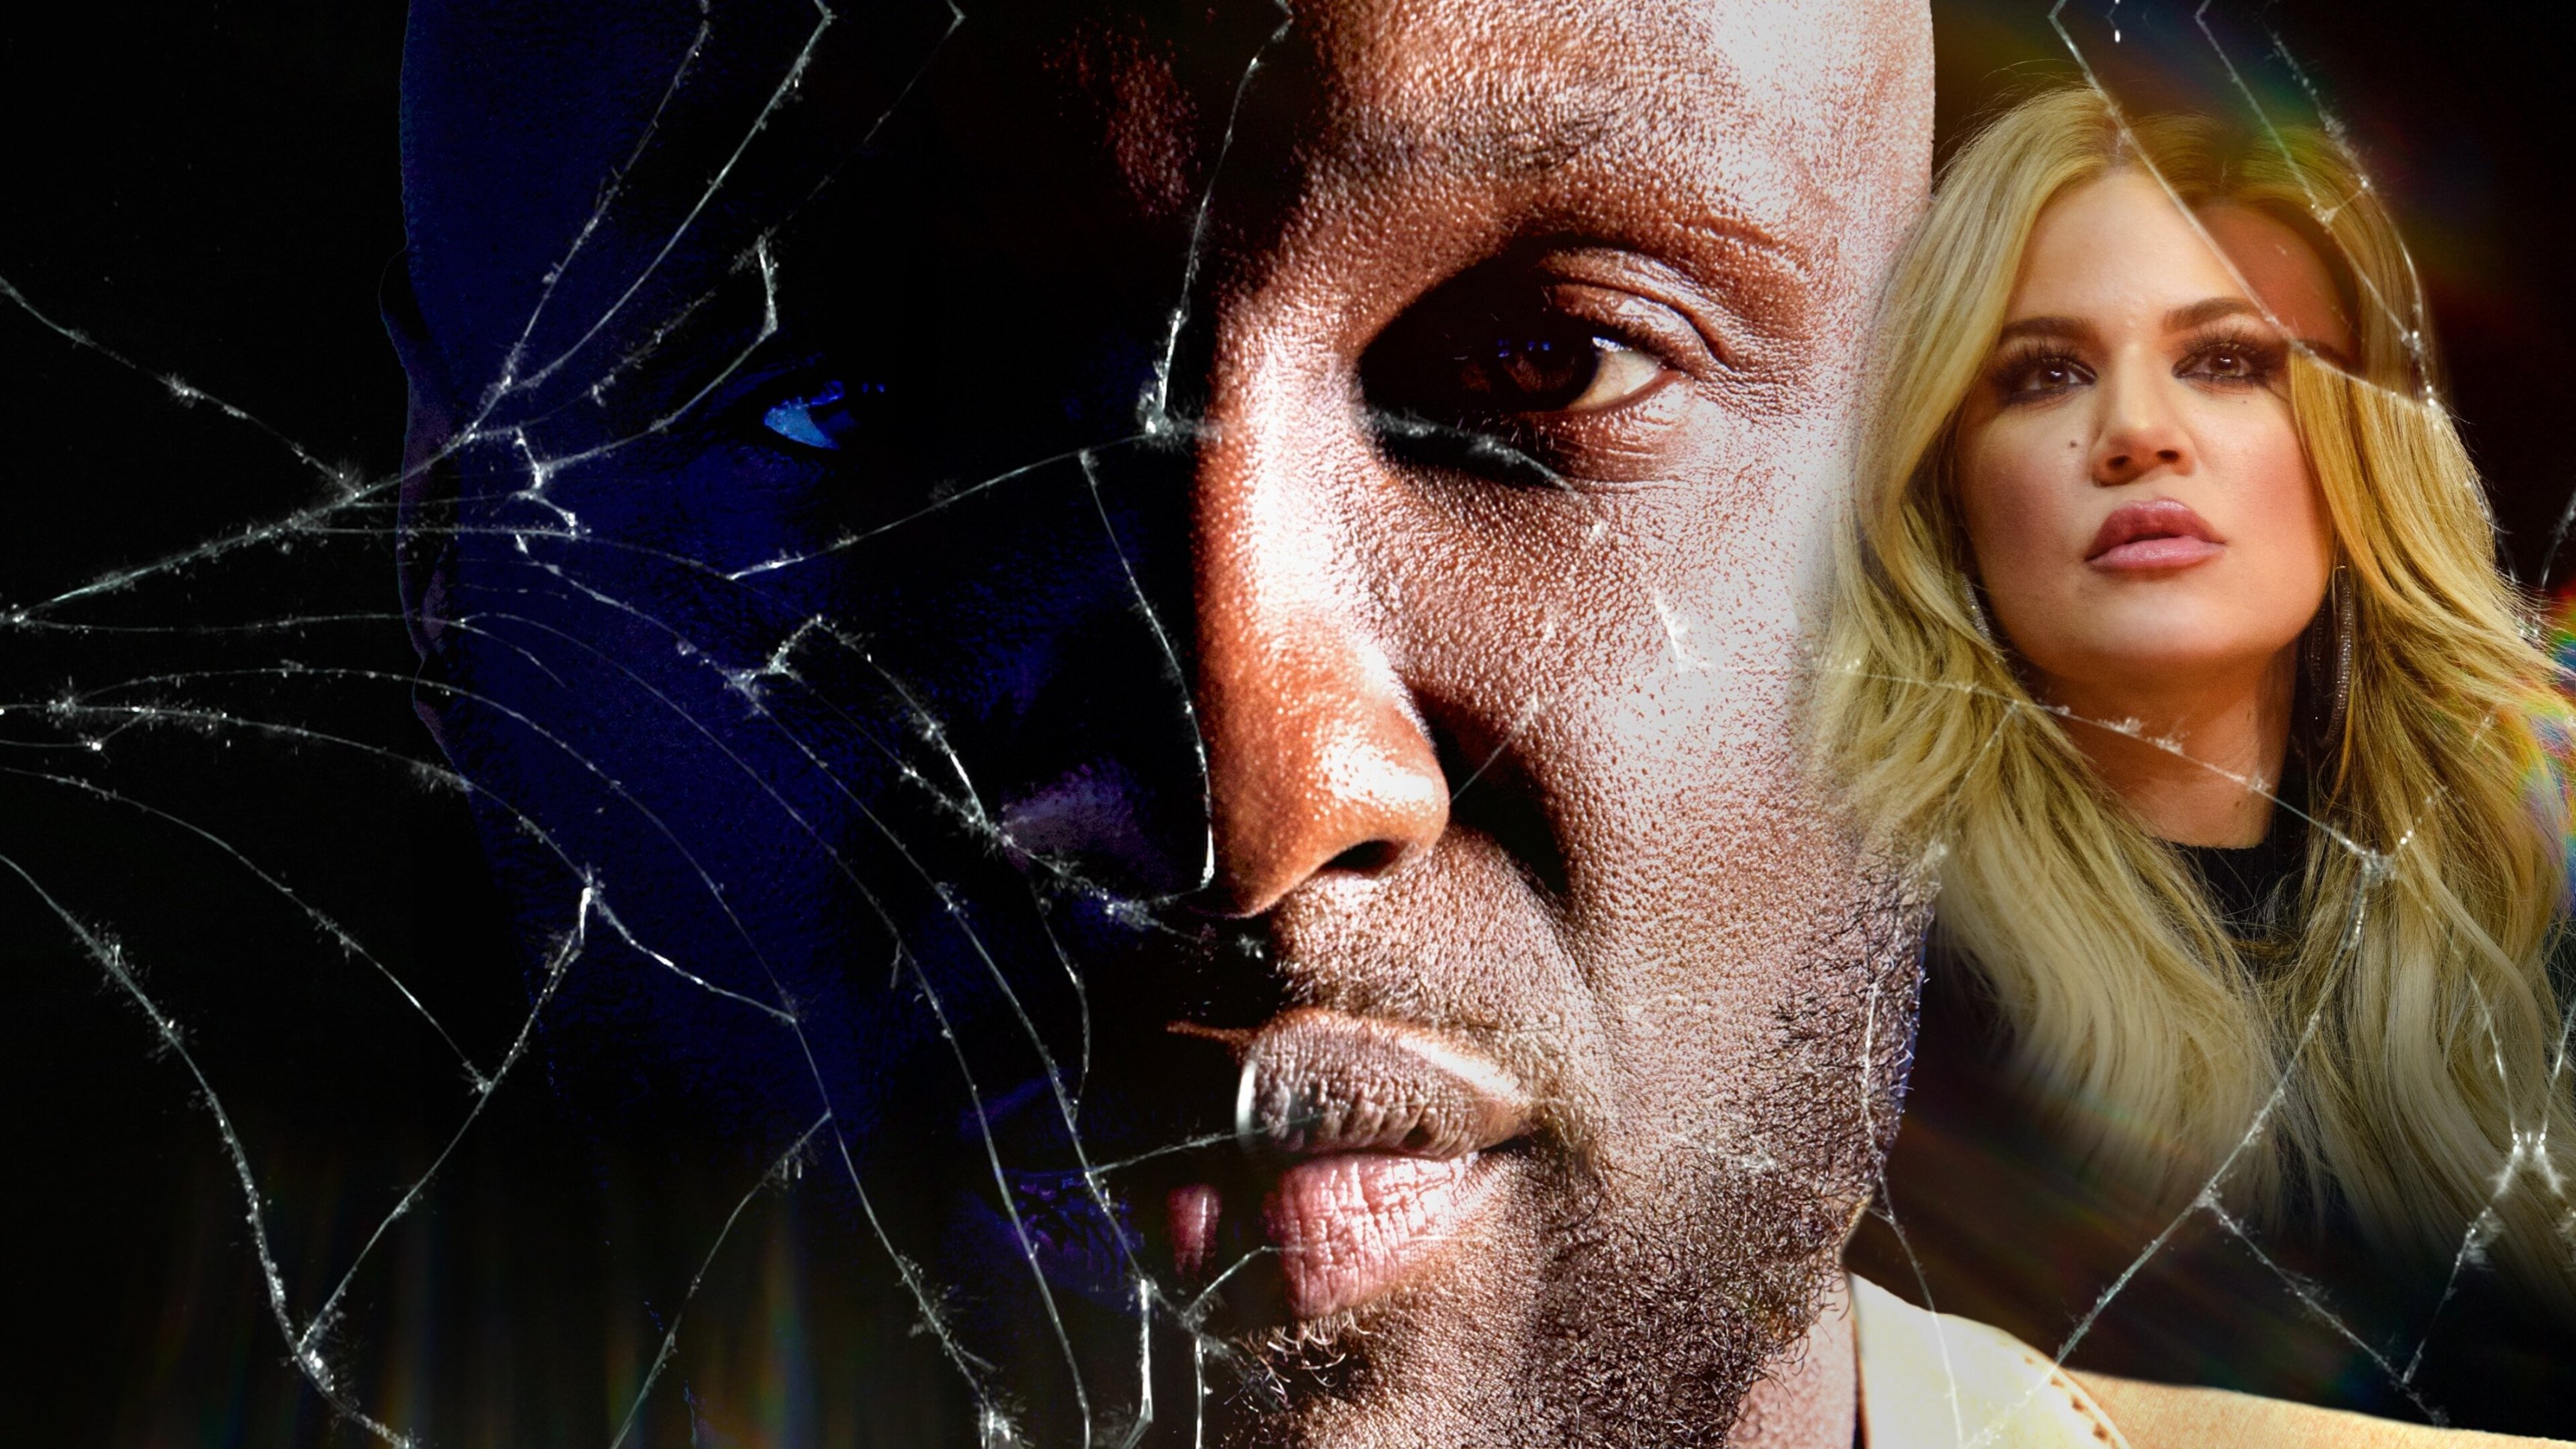 TMZ Presents: Lamar Odom: Sex, Drugs & Kardashians